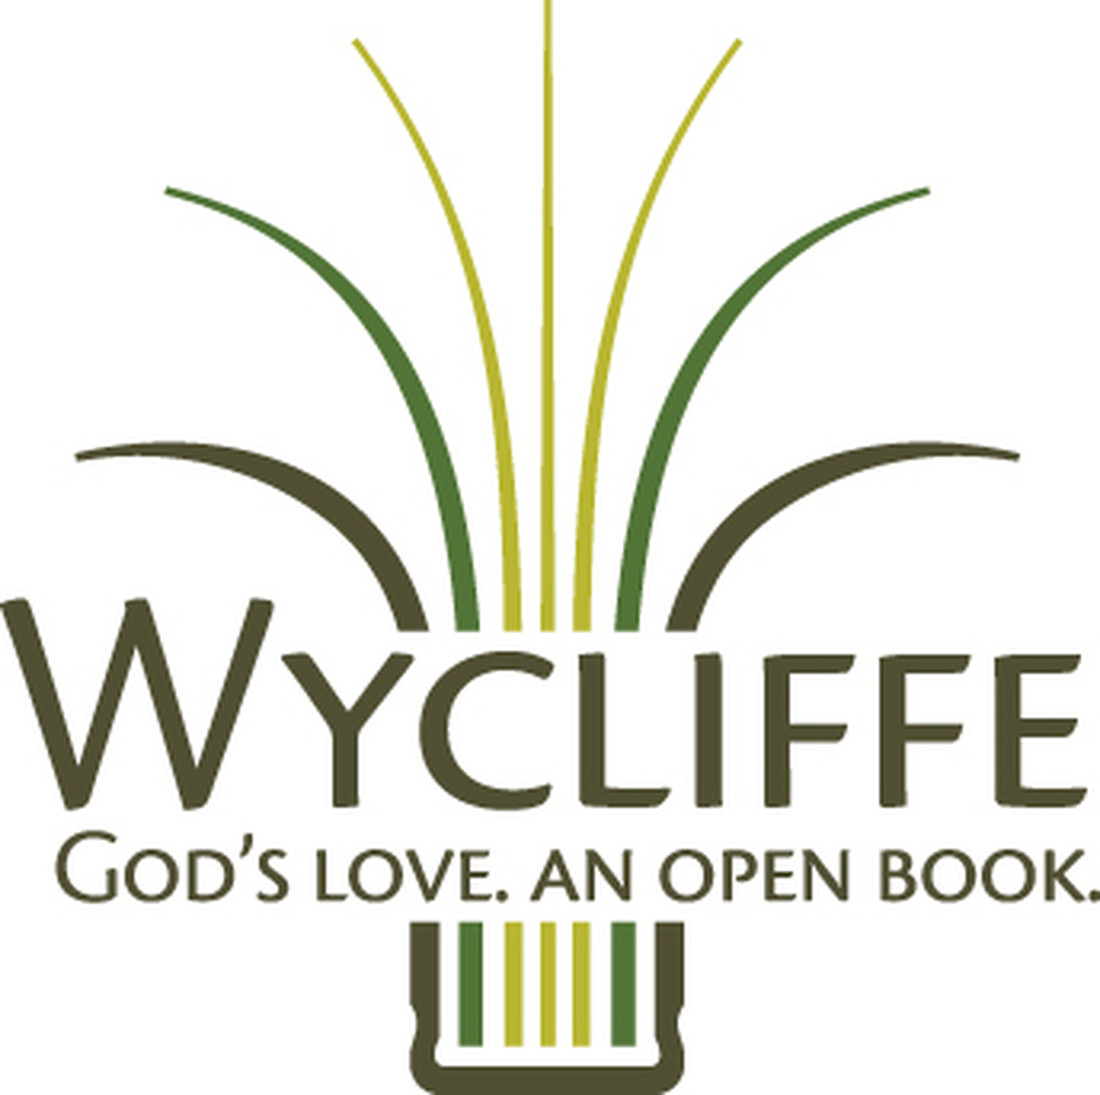 Wycliffe's Steady Focus